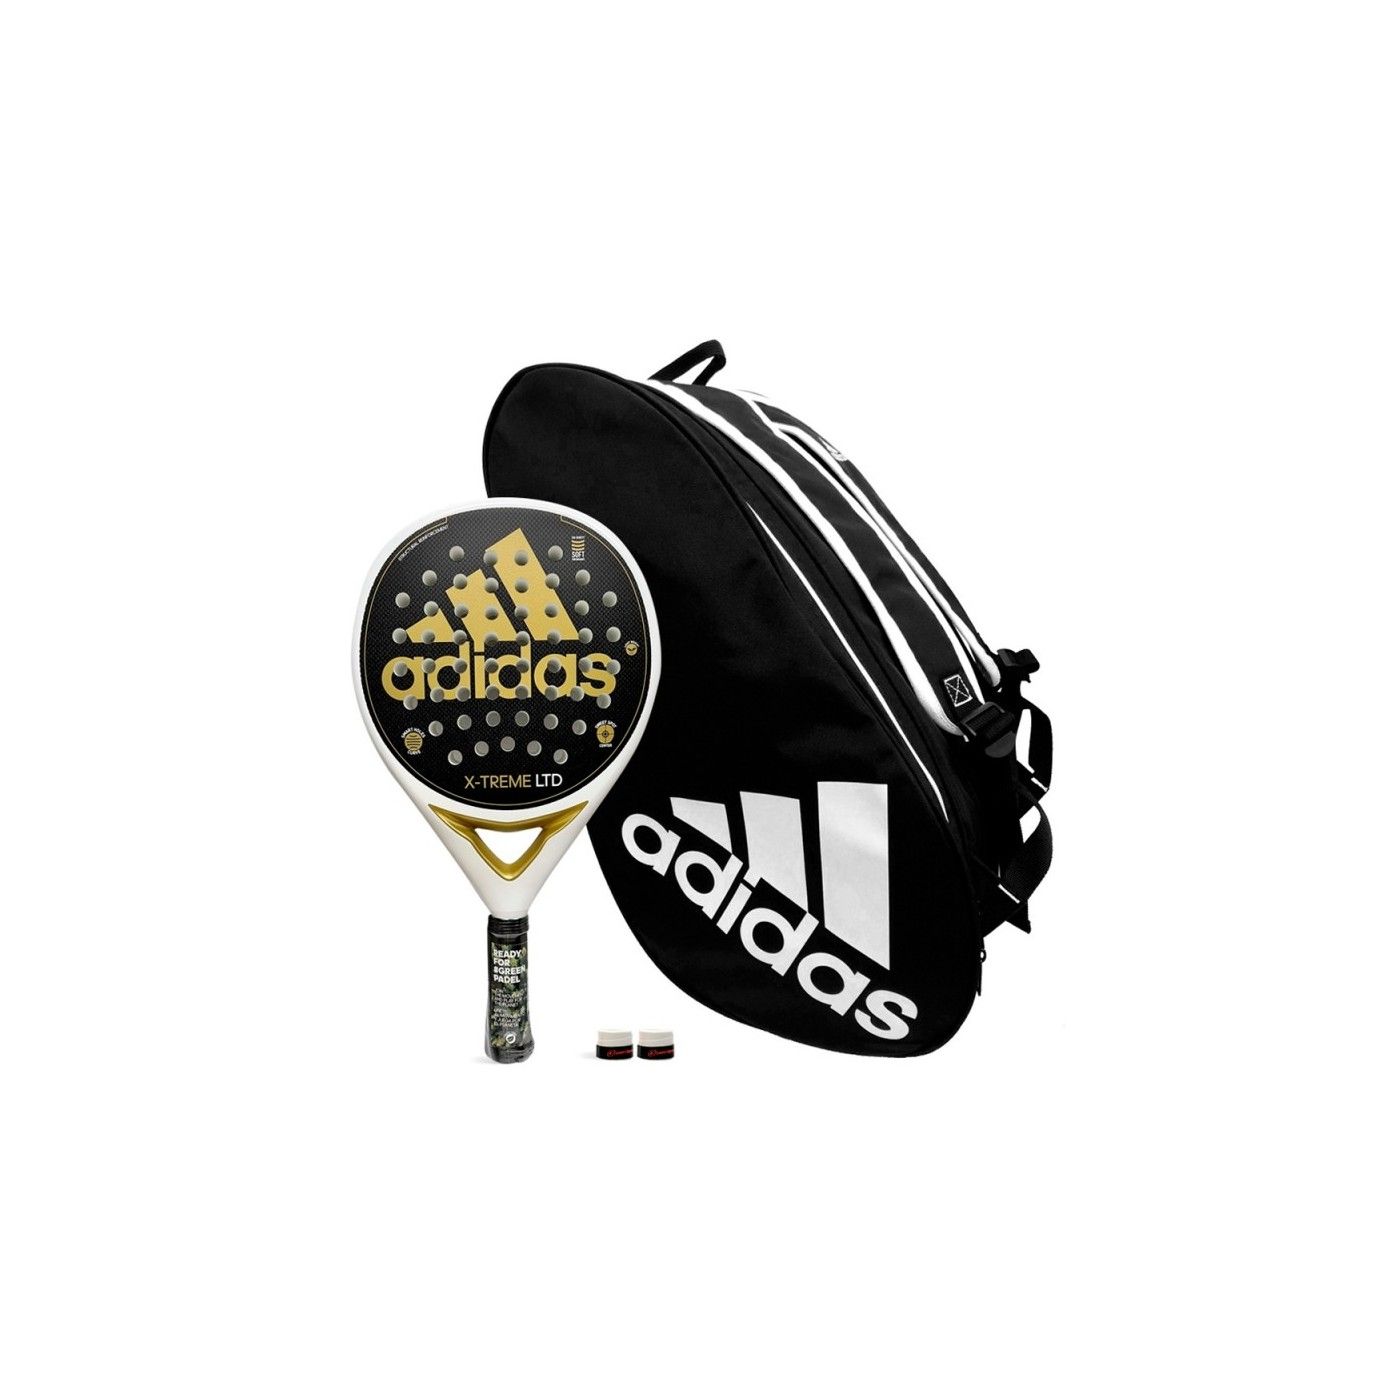 especificación Claire dictador Pack Adidas X-Treme LTD White / Gold + Bag Control | Ofertas De Pádel